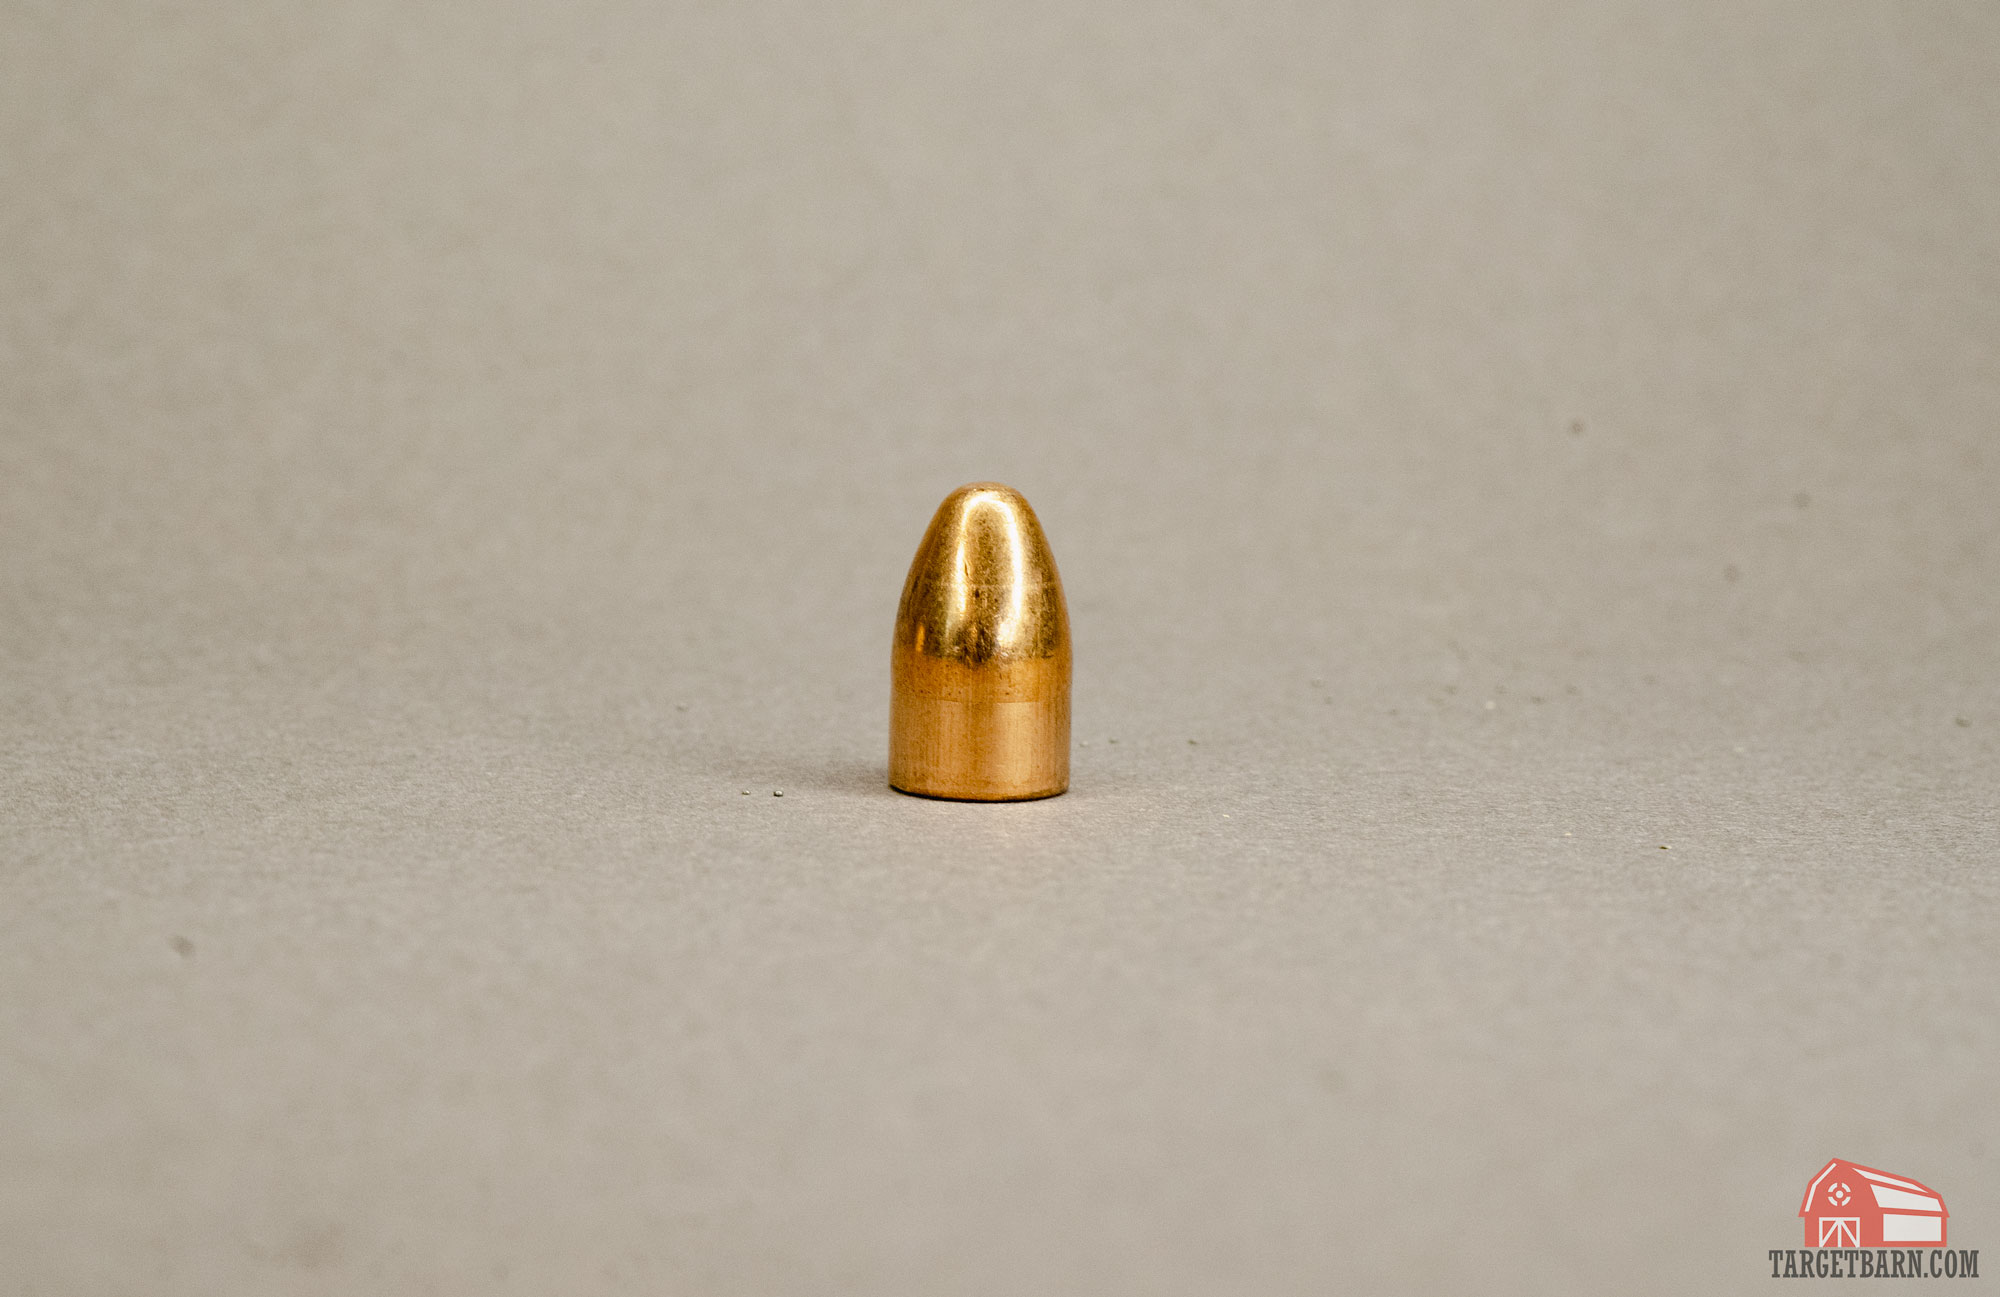 a 9mm bullet